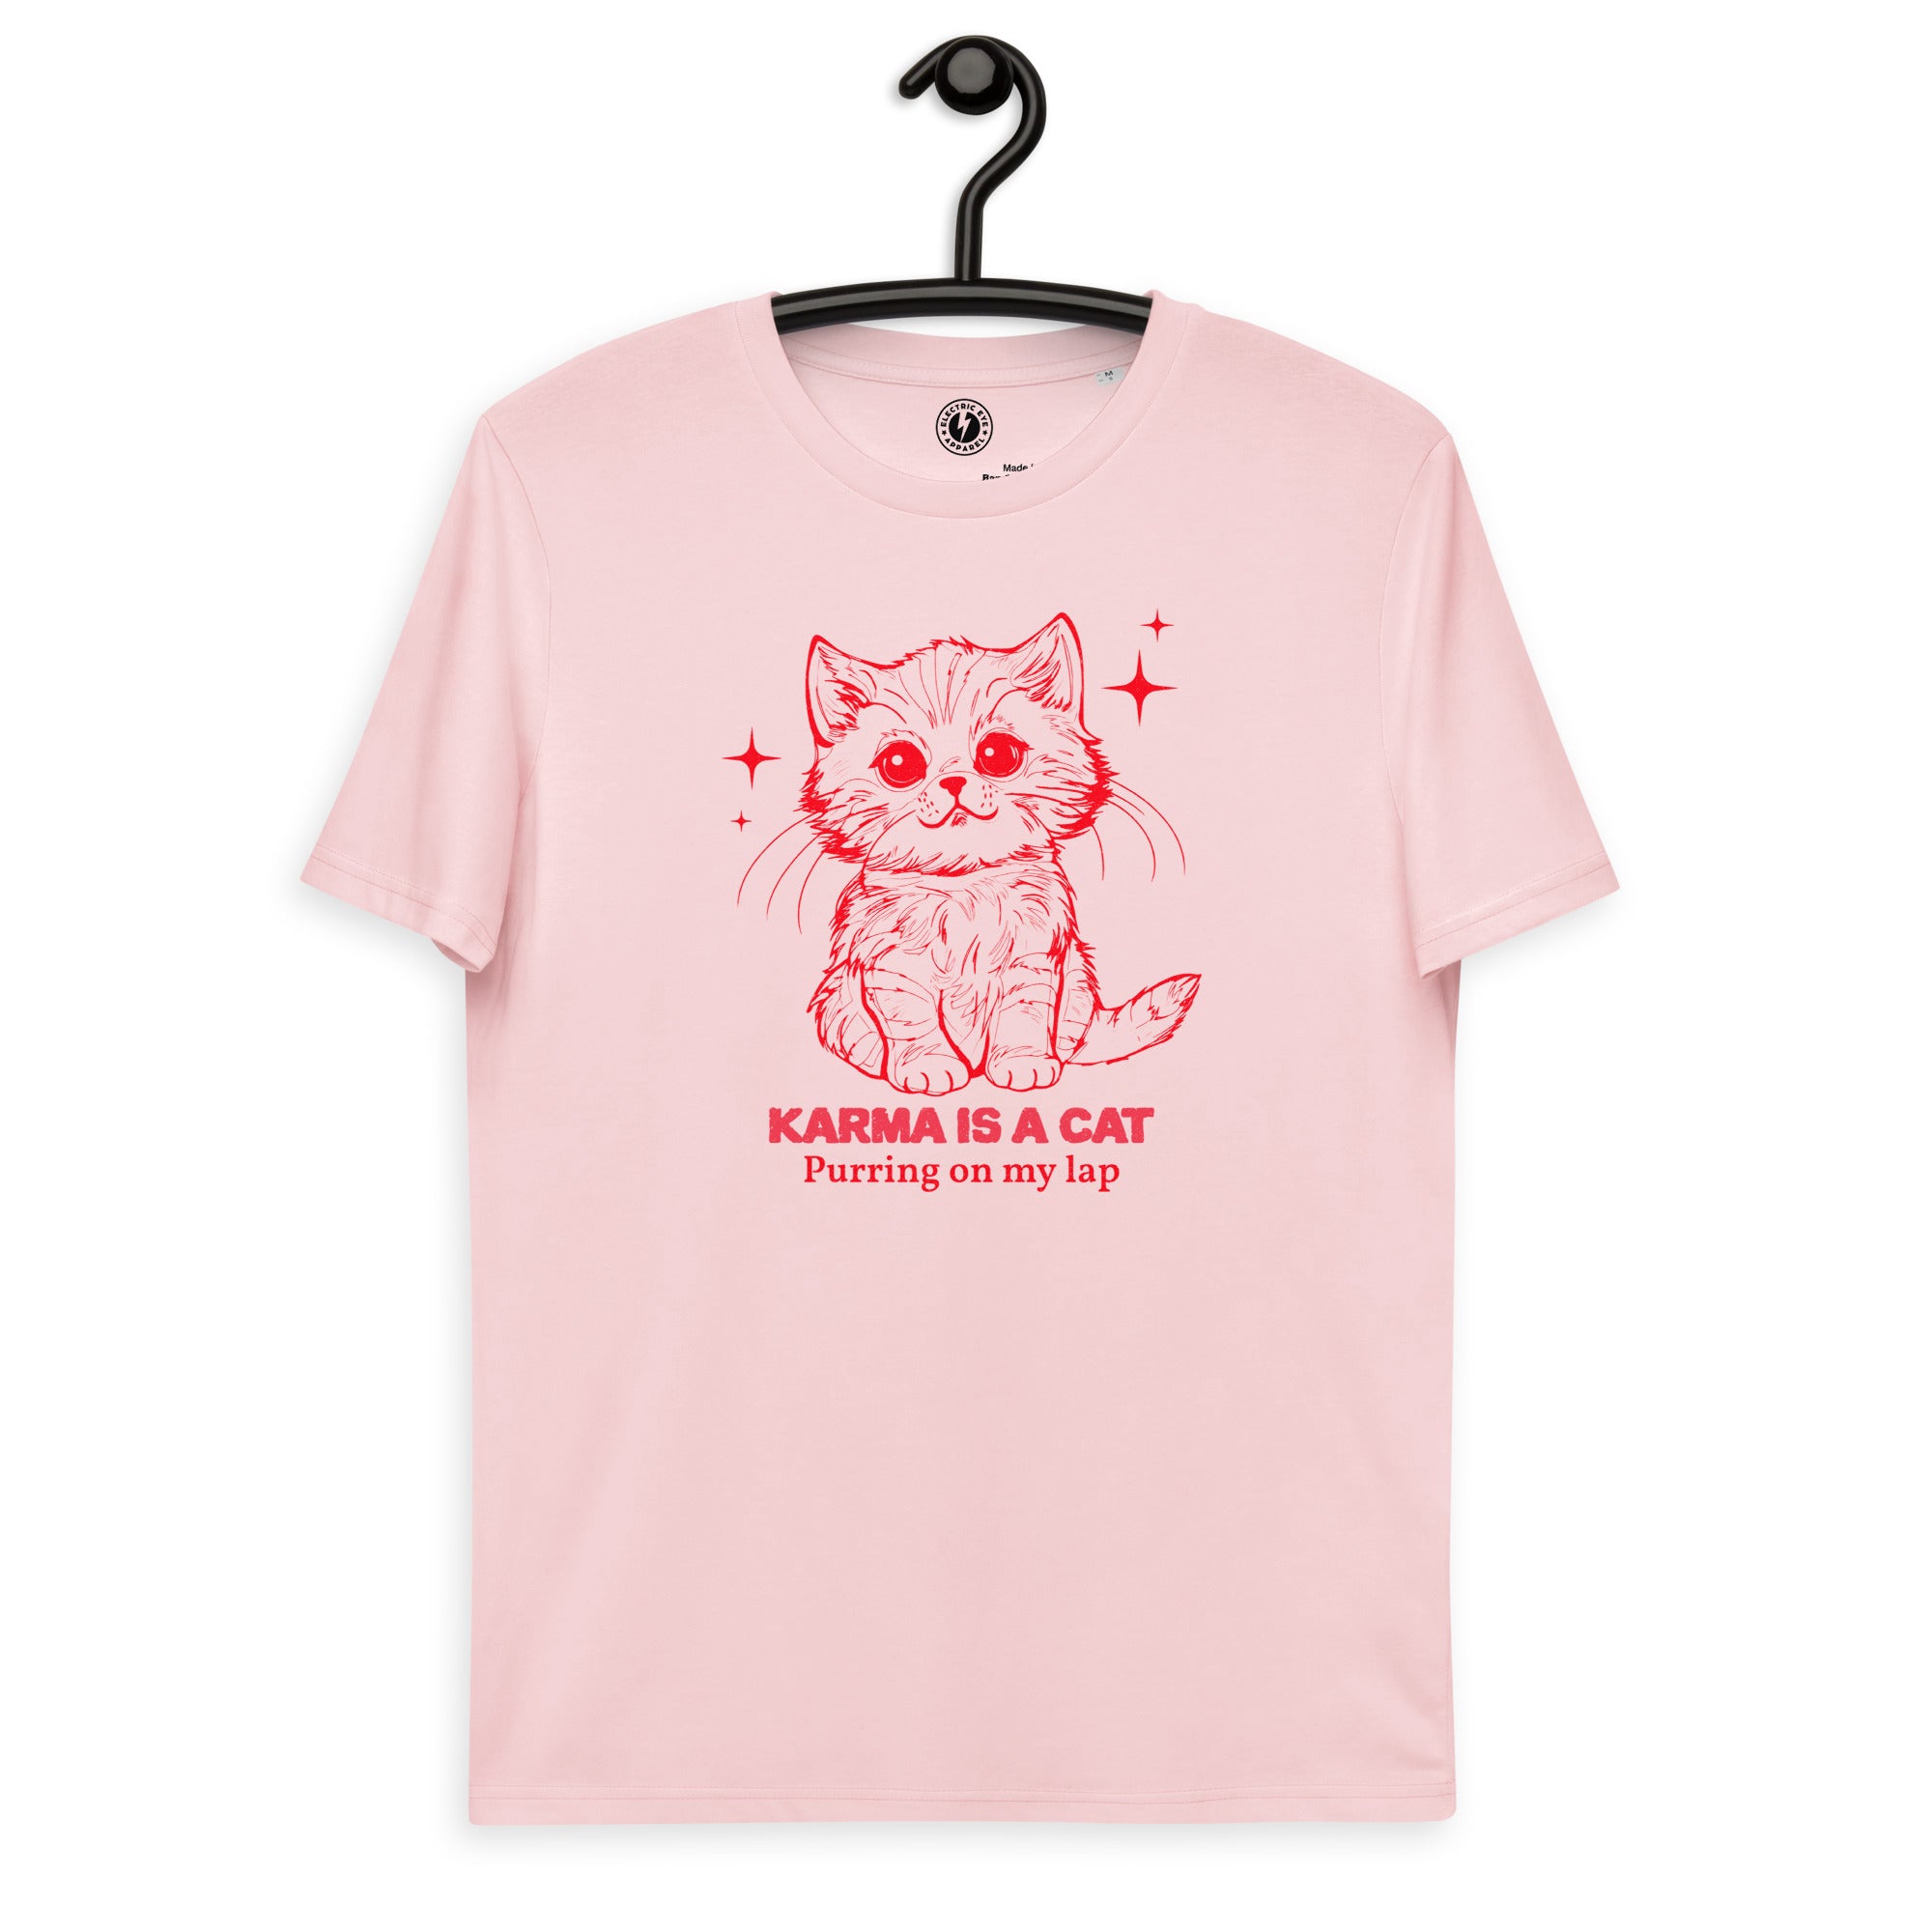 Karma is a Cat Vintage Illustration Printed Unisex organic cotton t-shirt (red print)